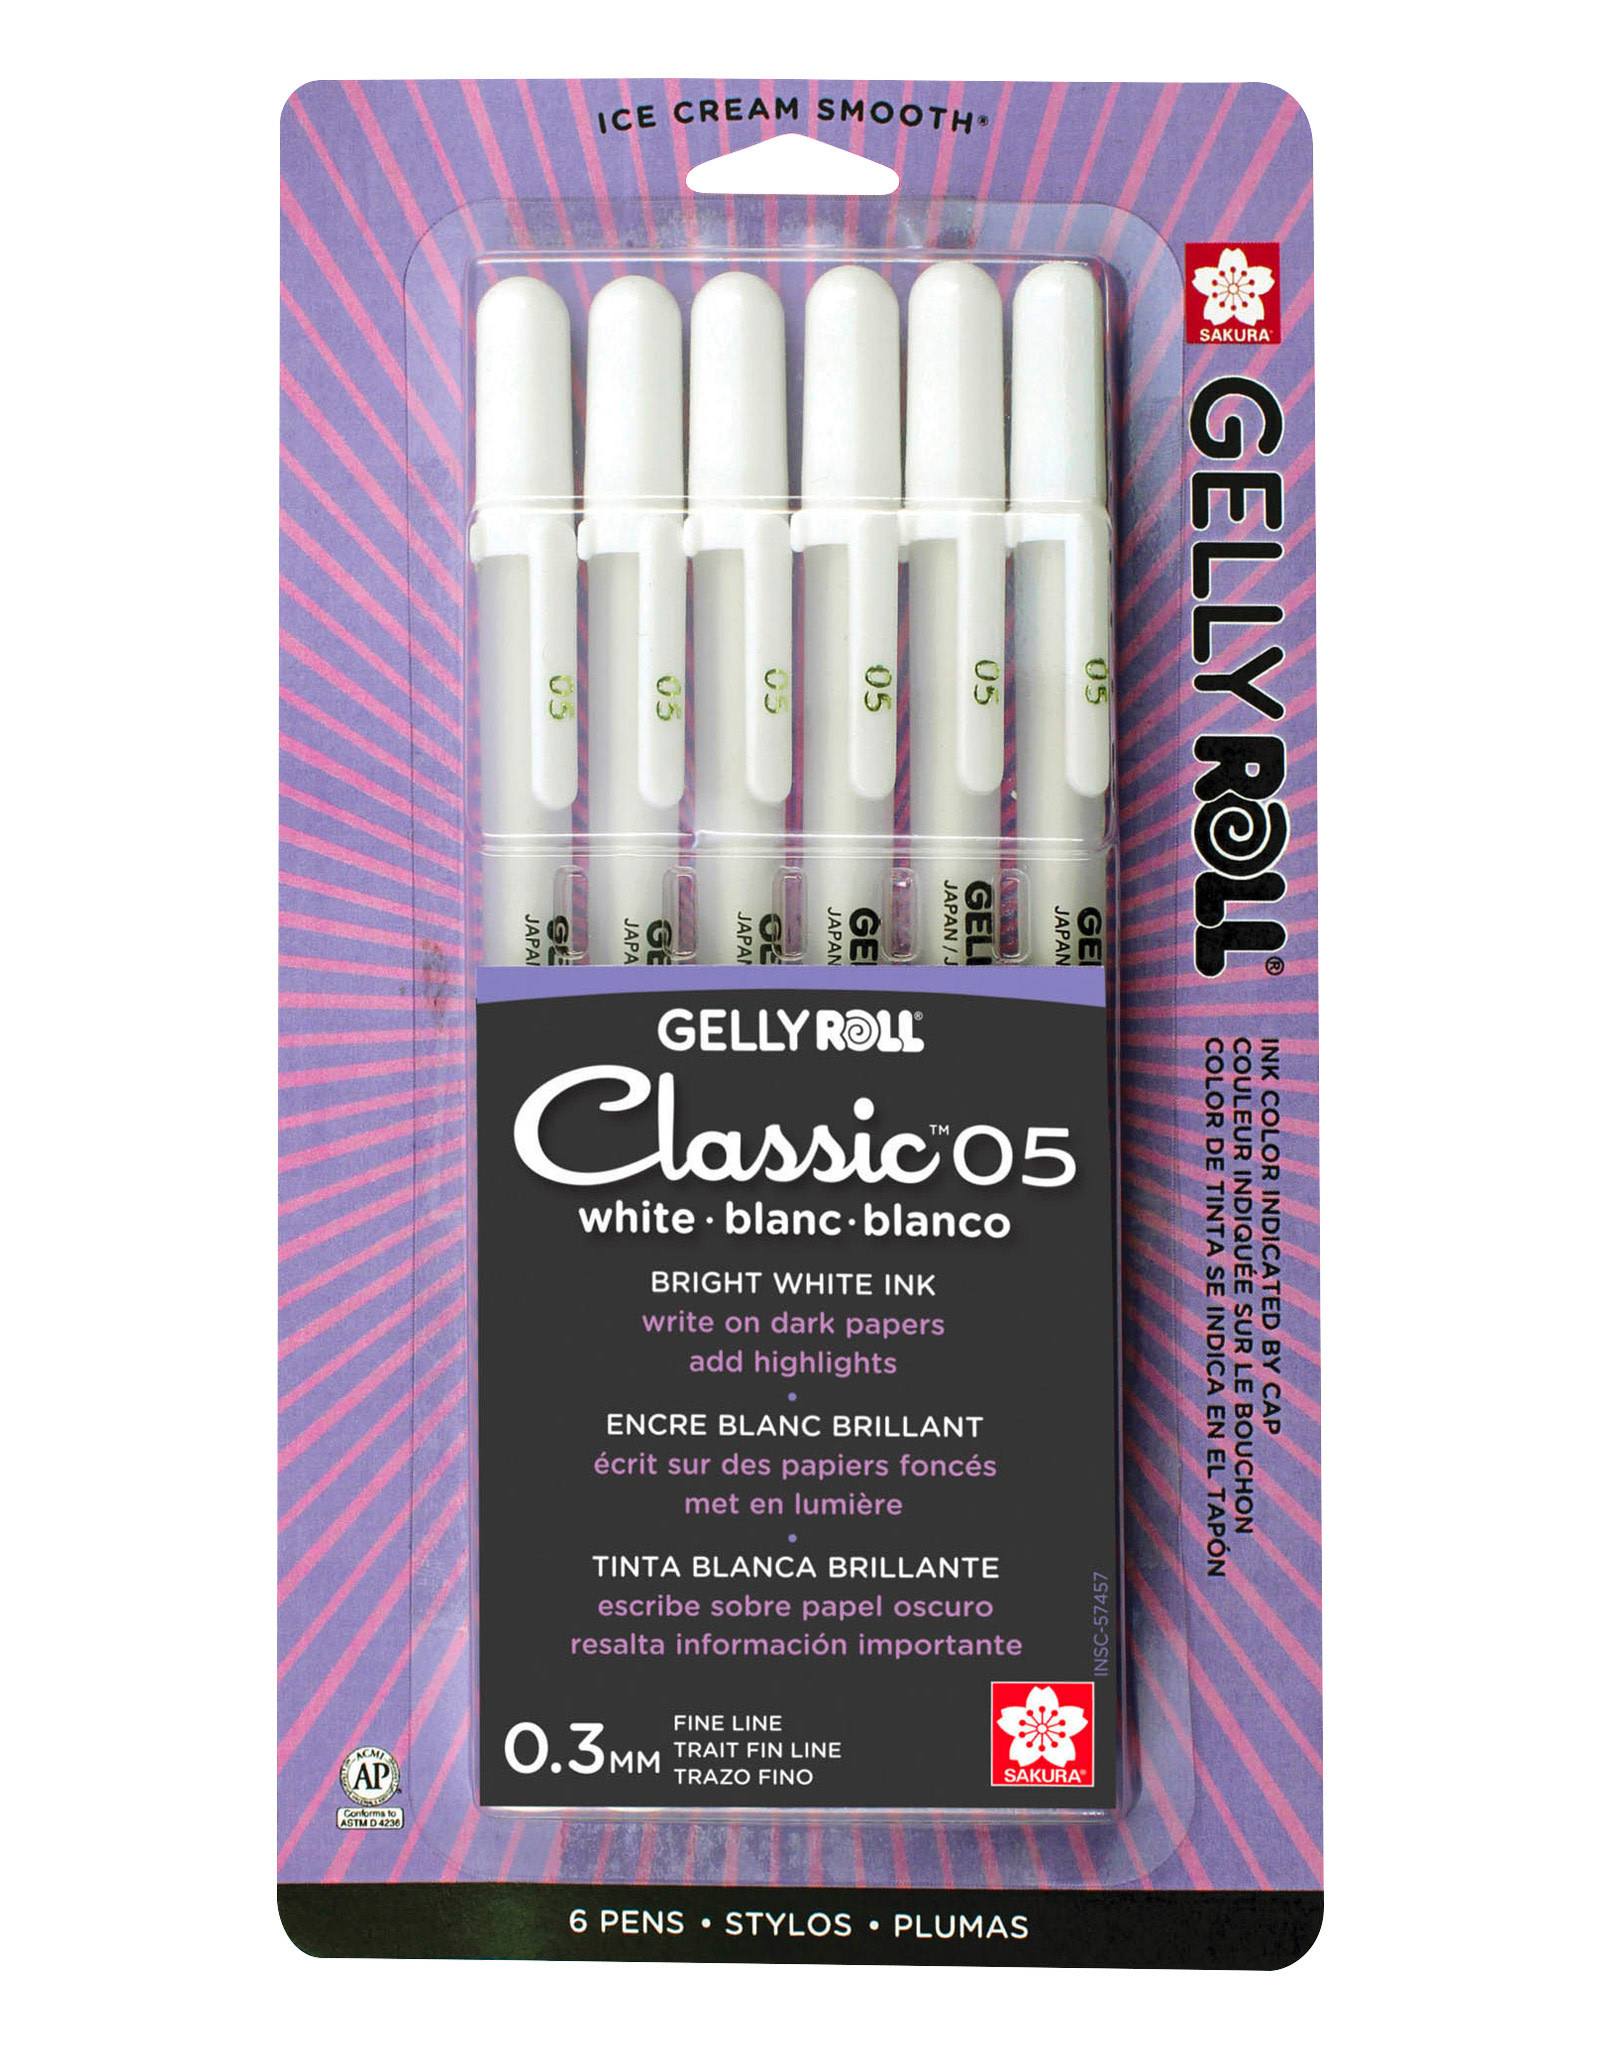 Fine (05) White Gelly Roll Pens (3)